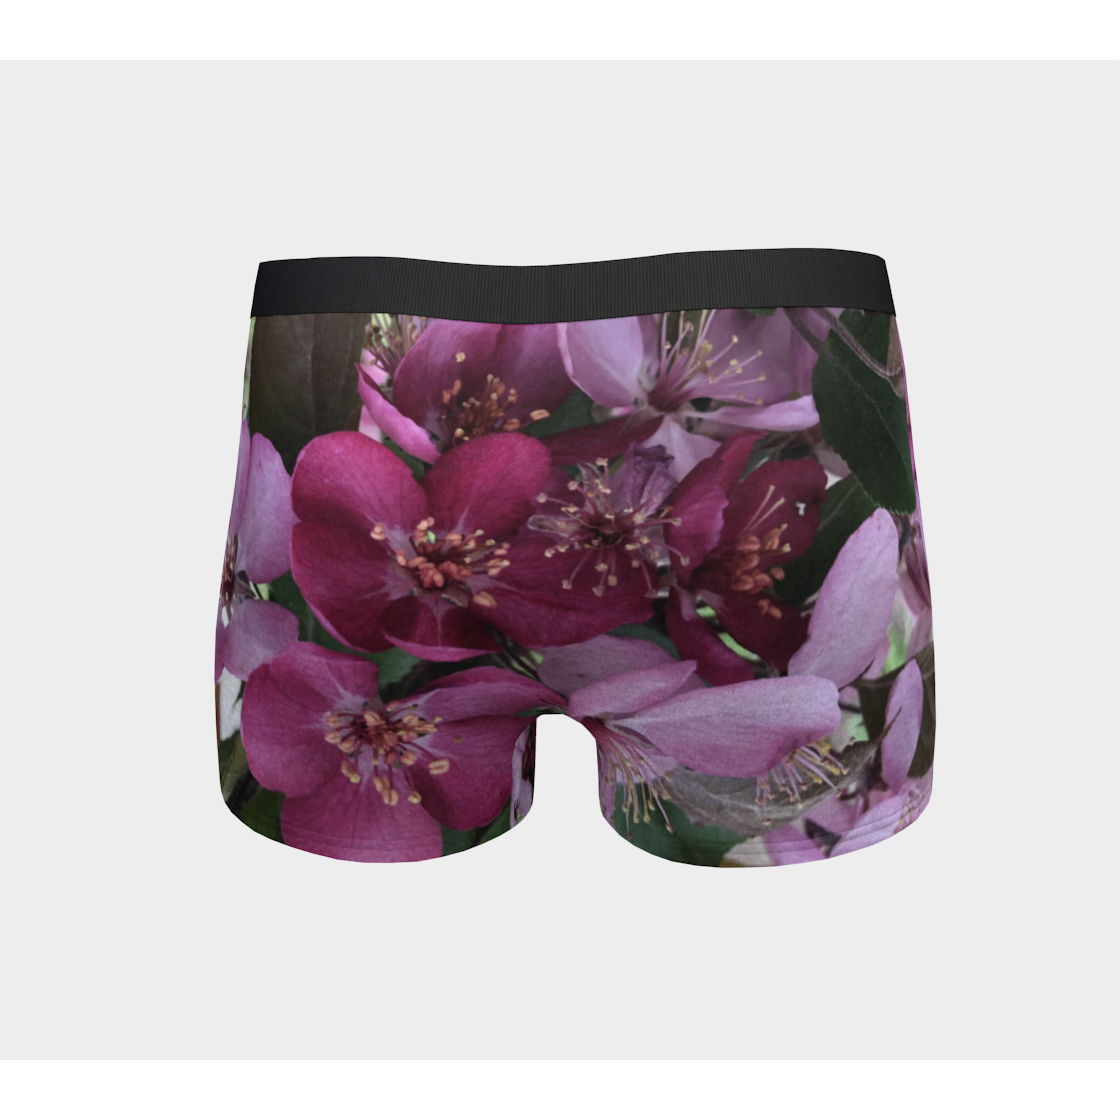 Boy Shorts, Women's Underwear, Flower Petal, Dark Band, Back